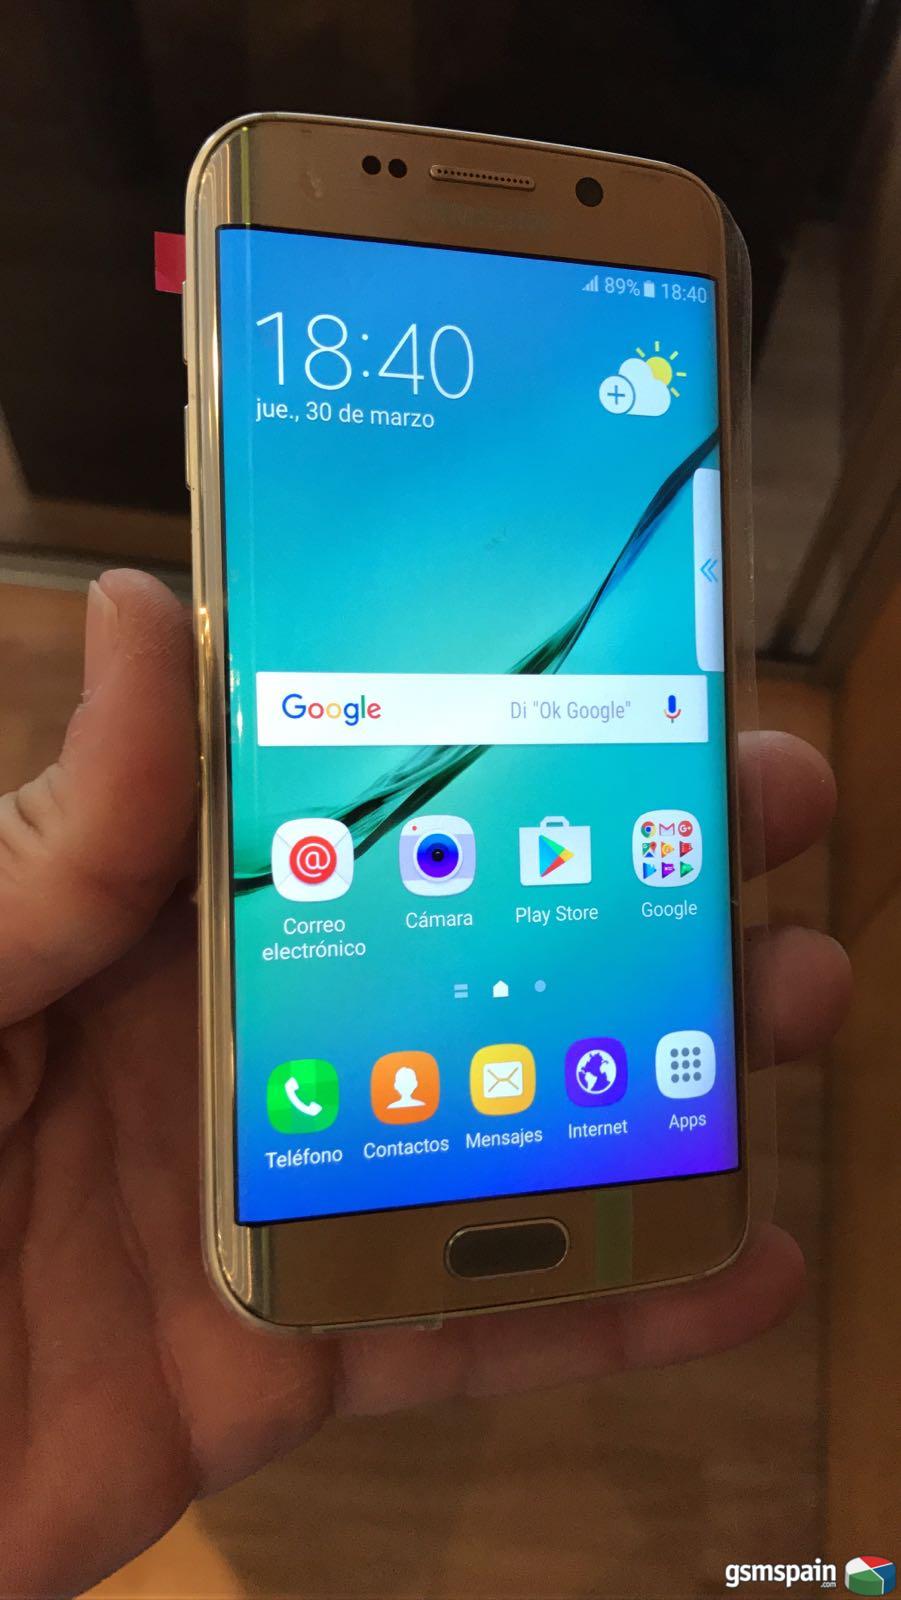 [VENDO] Galaxy S6 Edge Gold 64 Gb a Estrenar